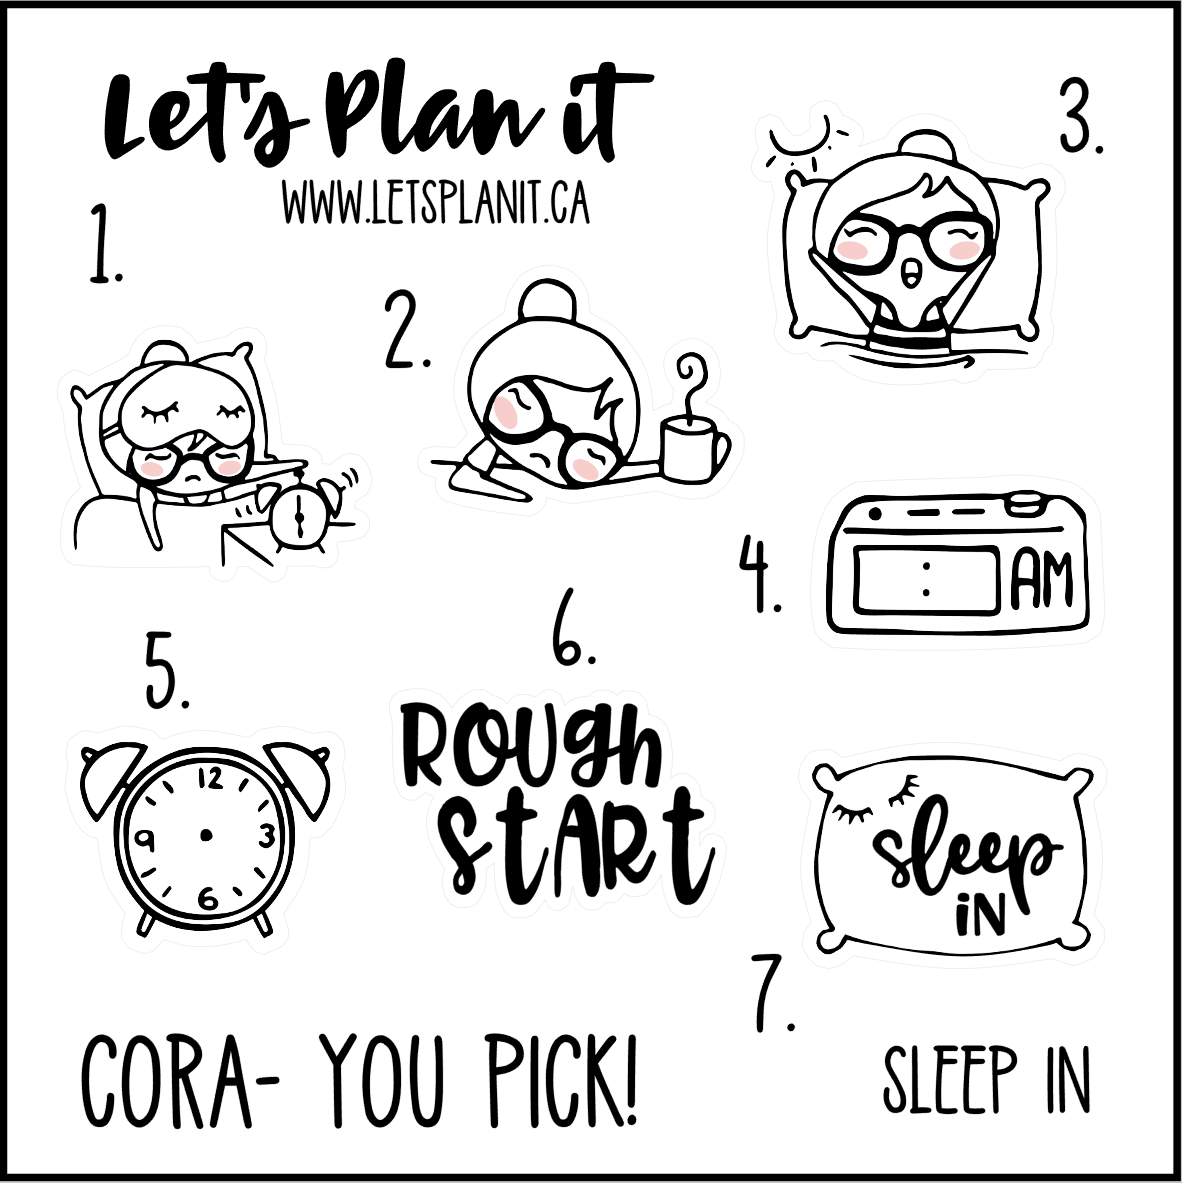 Cora-u-pick- Sleep In